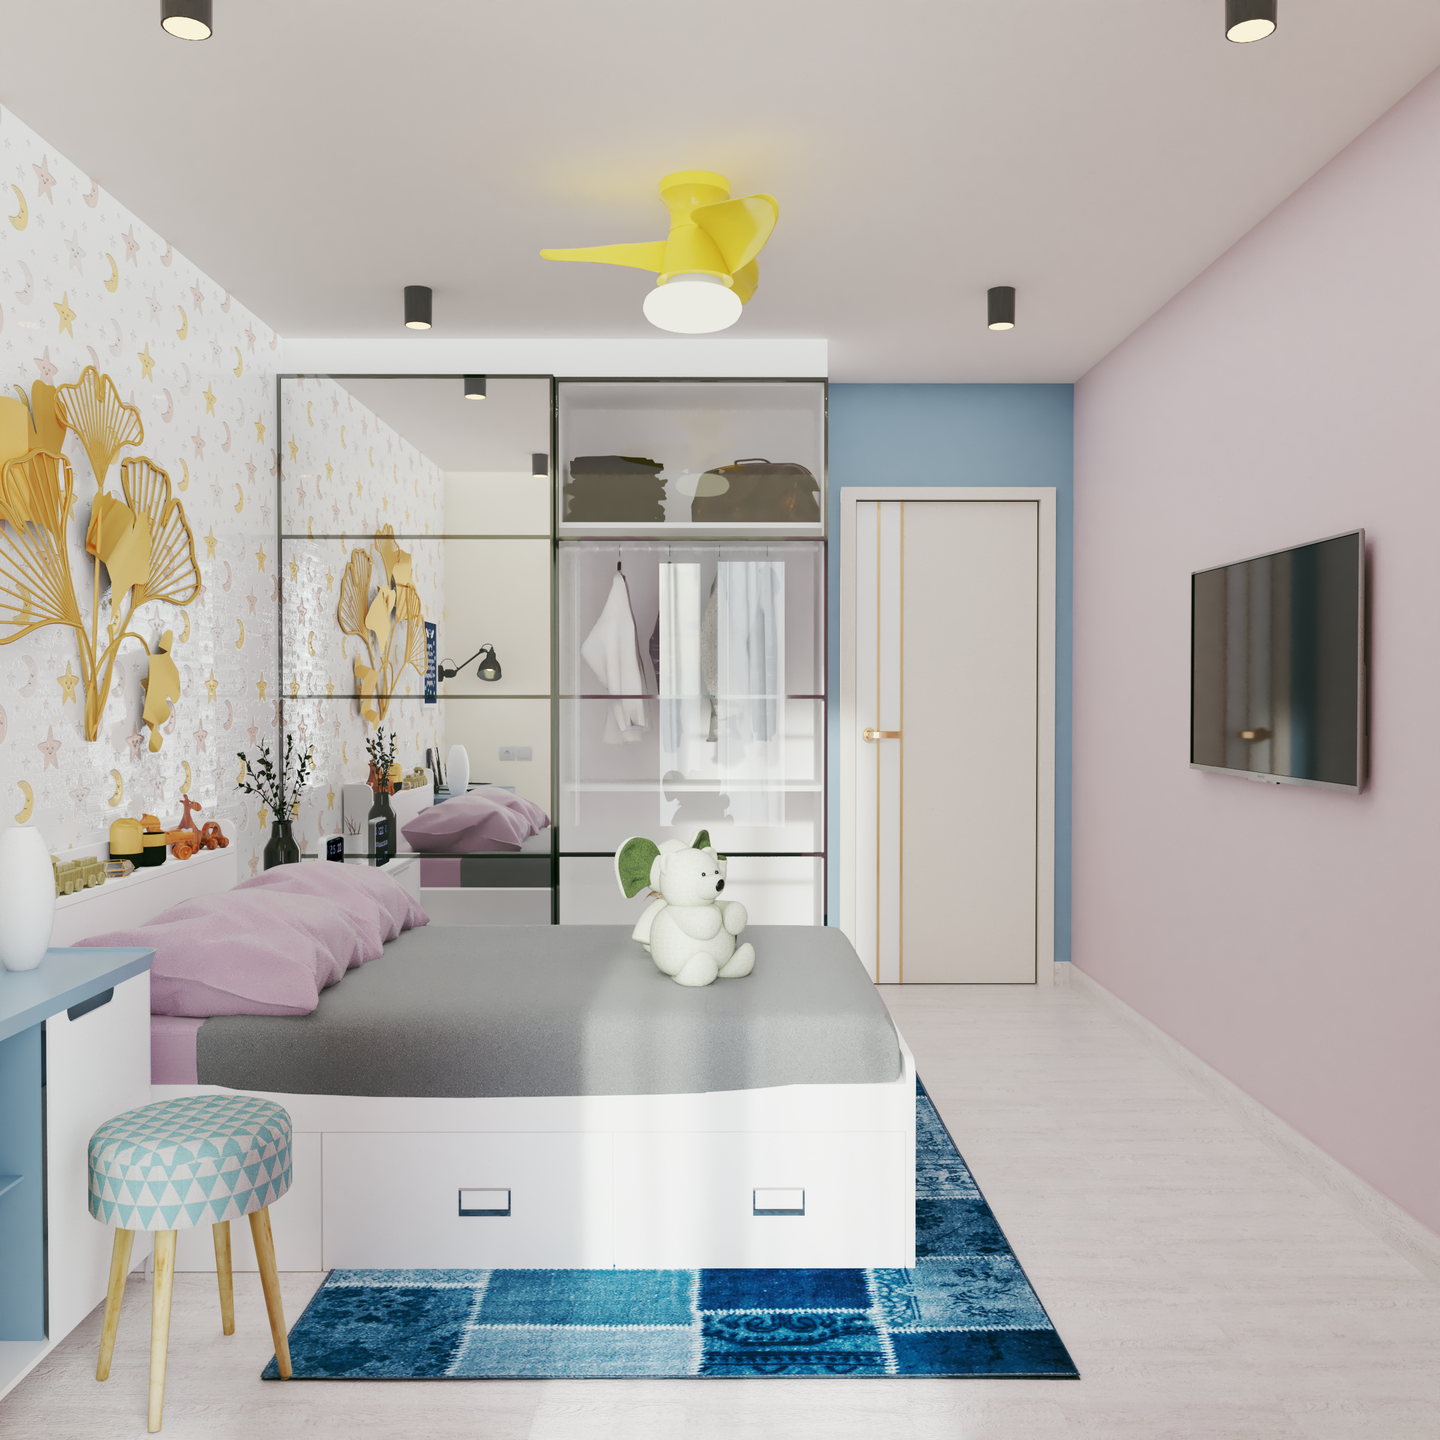 Colourful Kids Bedroom Designed With Modern Elements - Livspace